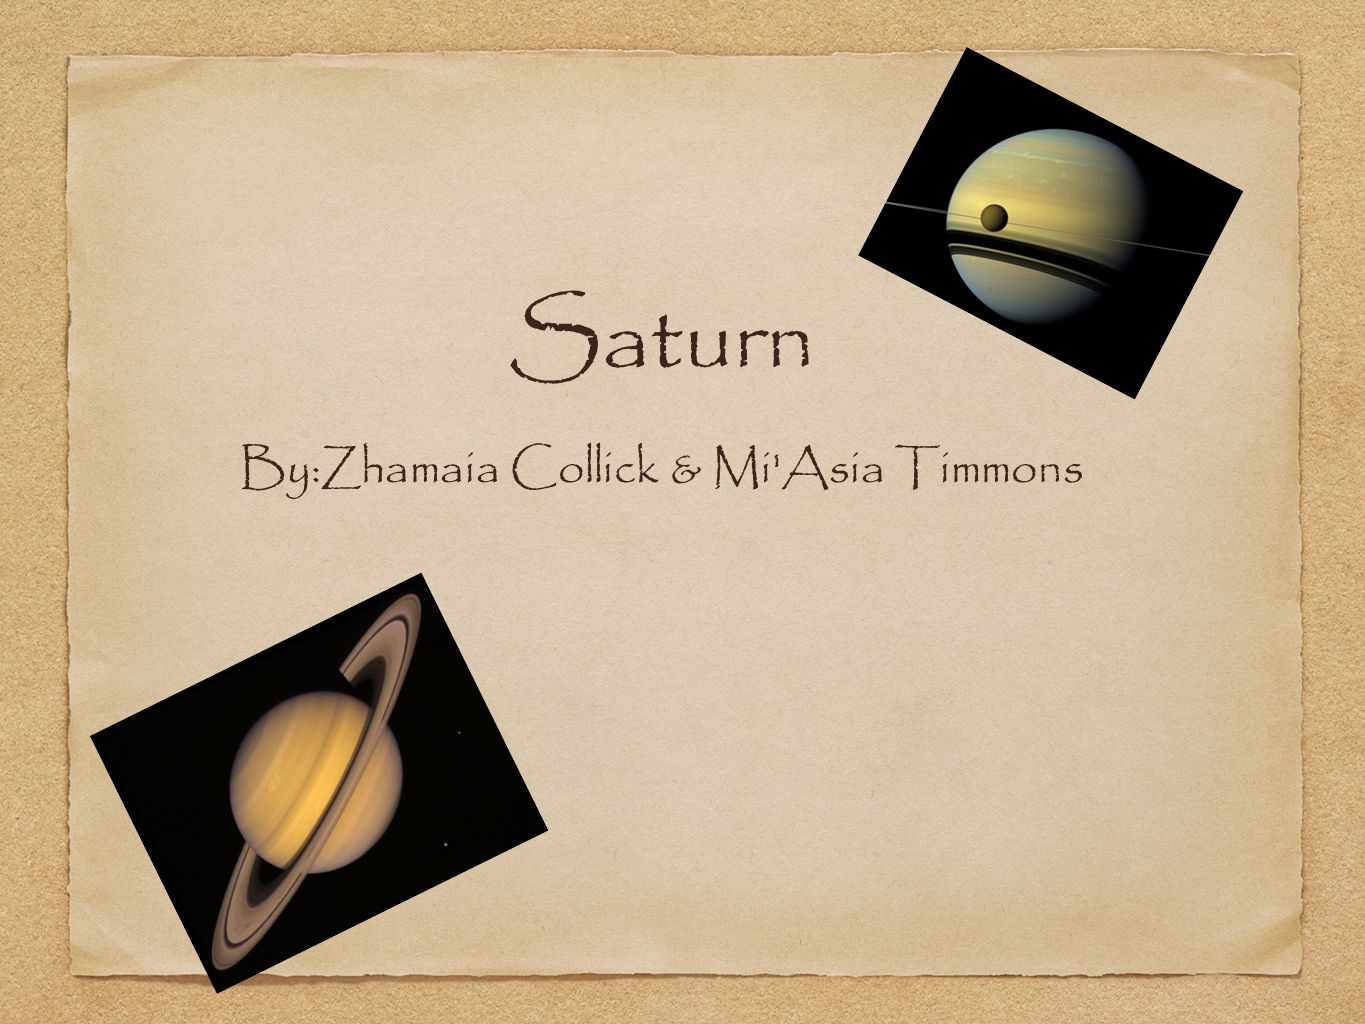 Saturn By:Zhamaia Collick & Mi Asia Timmons